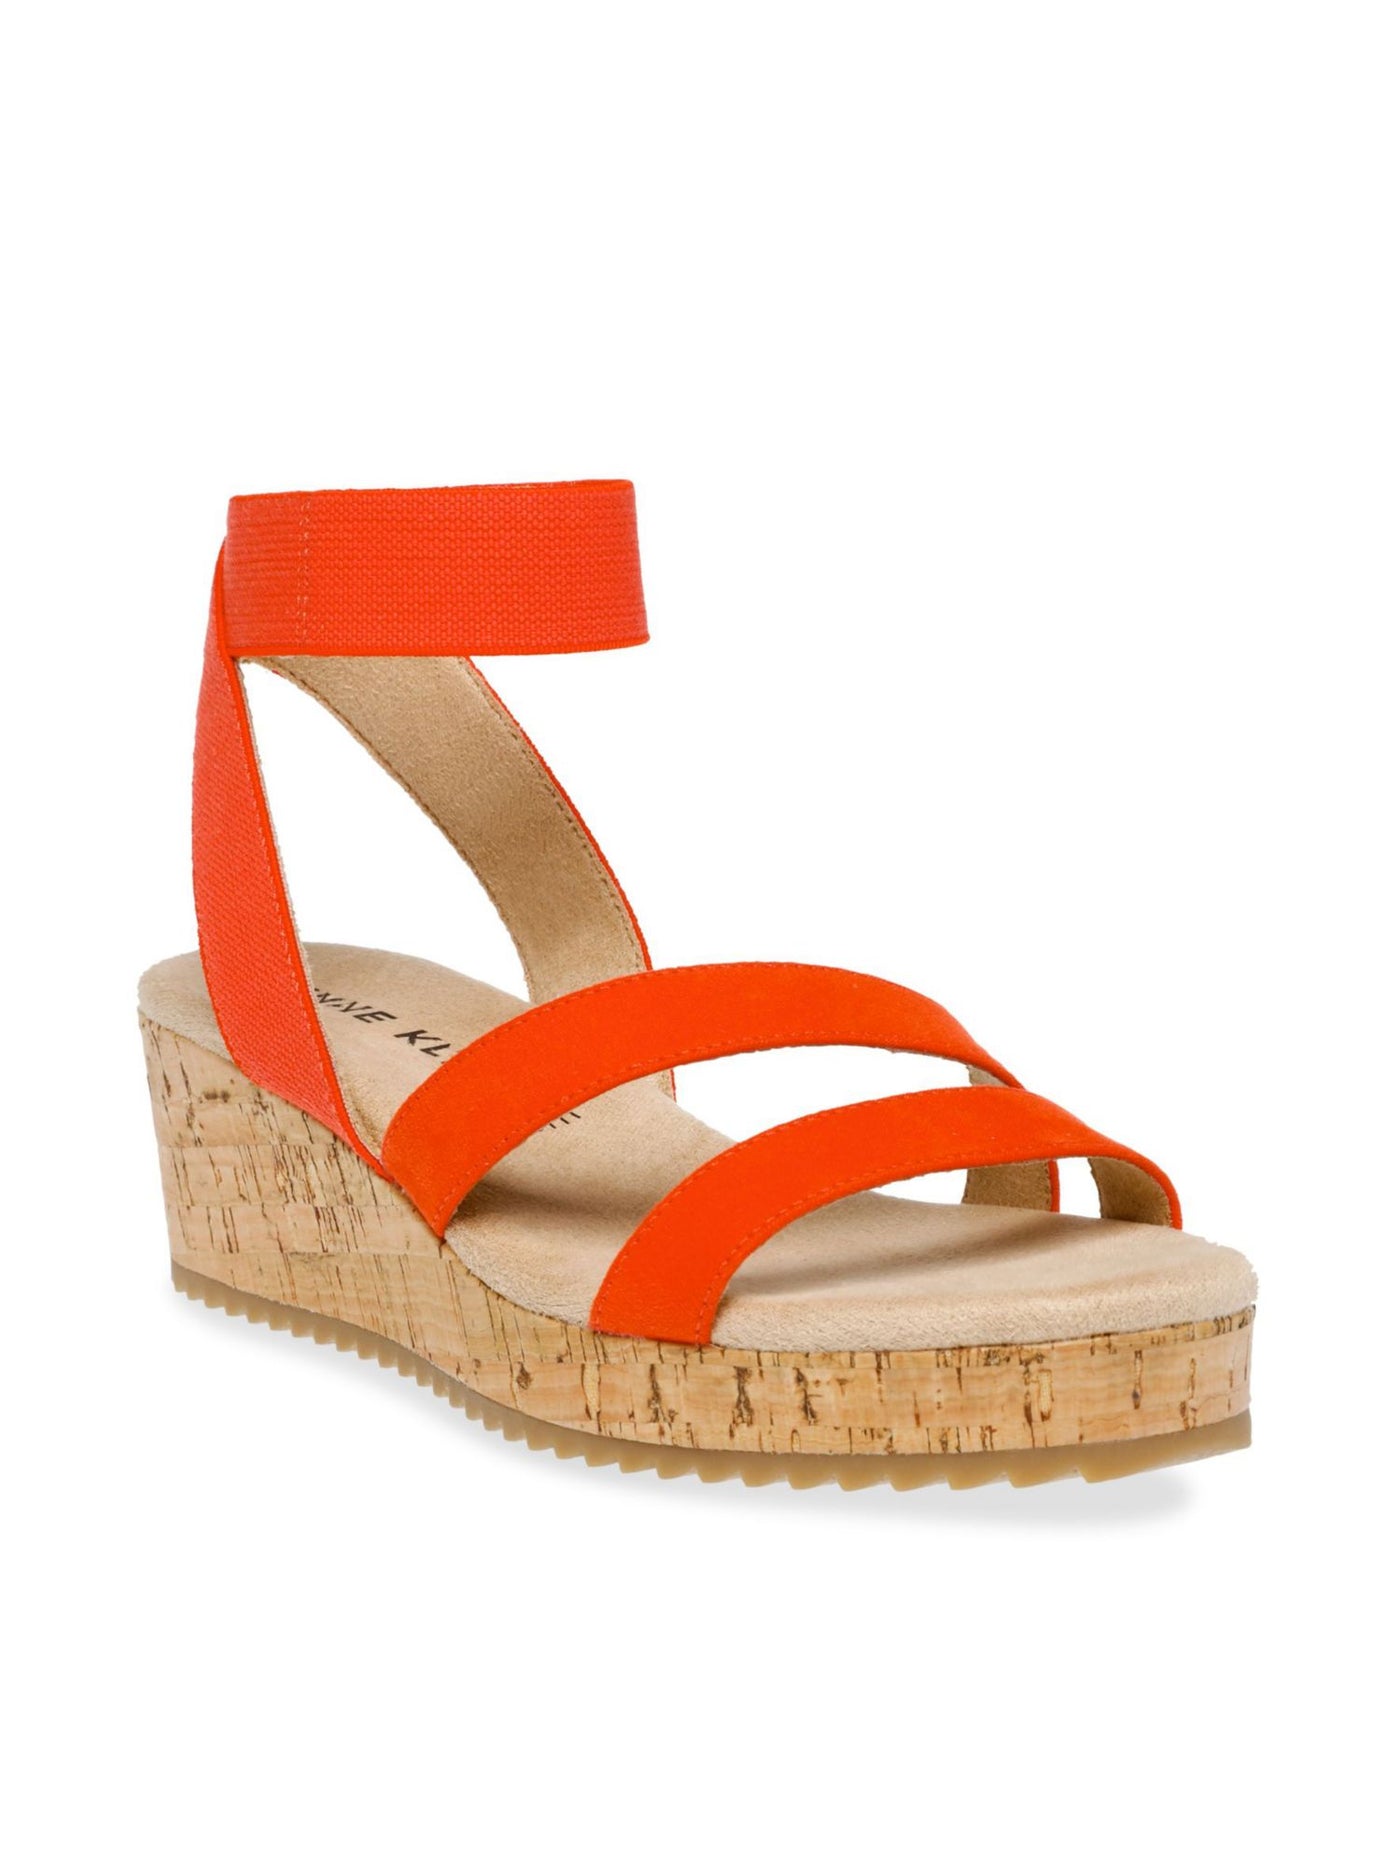 ANNE KLEIN Womens Orange 1" Platform Padded Alyson Open Toe Wedge Slip On Espadrille Shoes 5.5 M